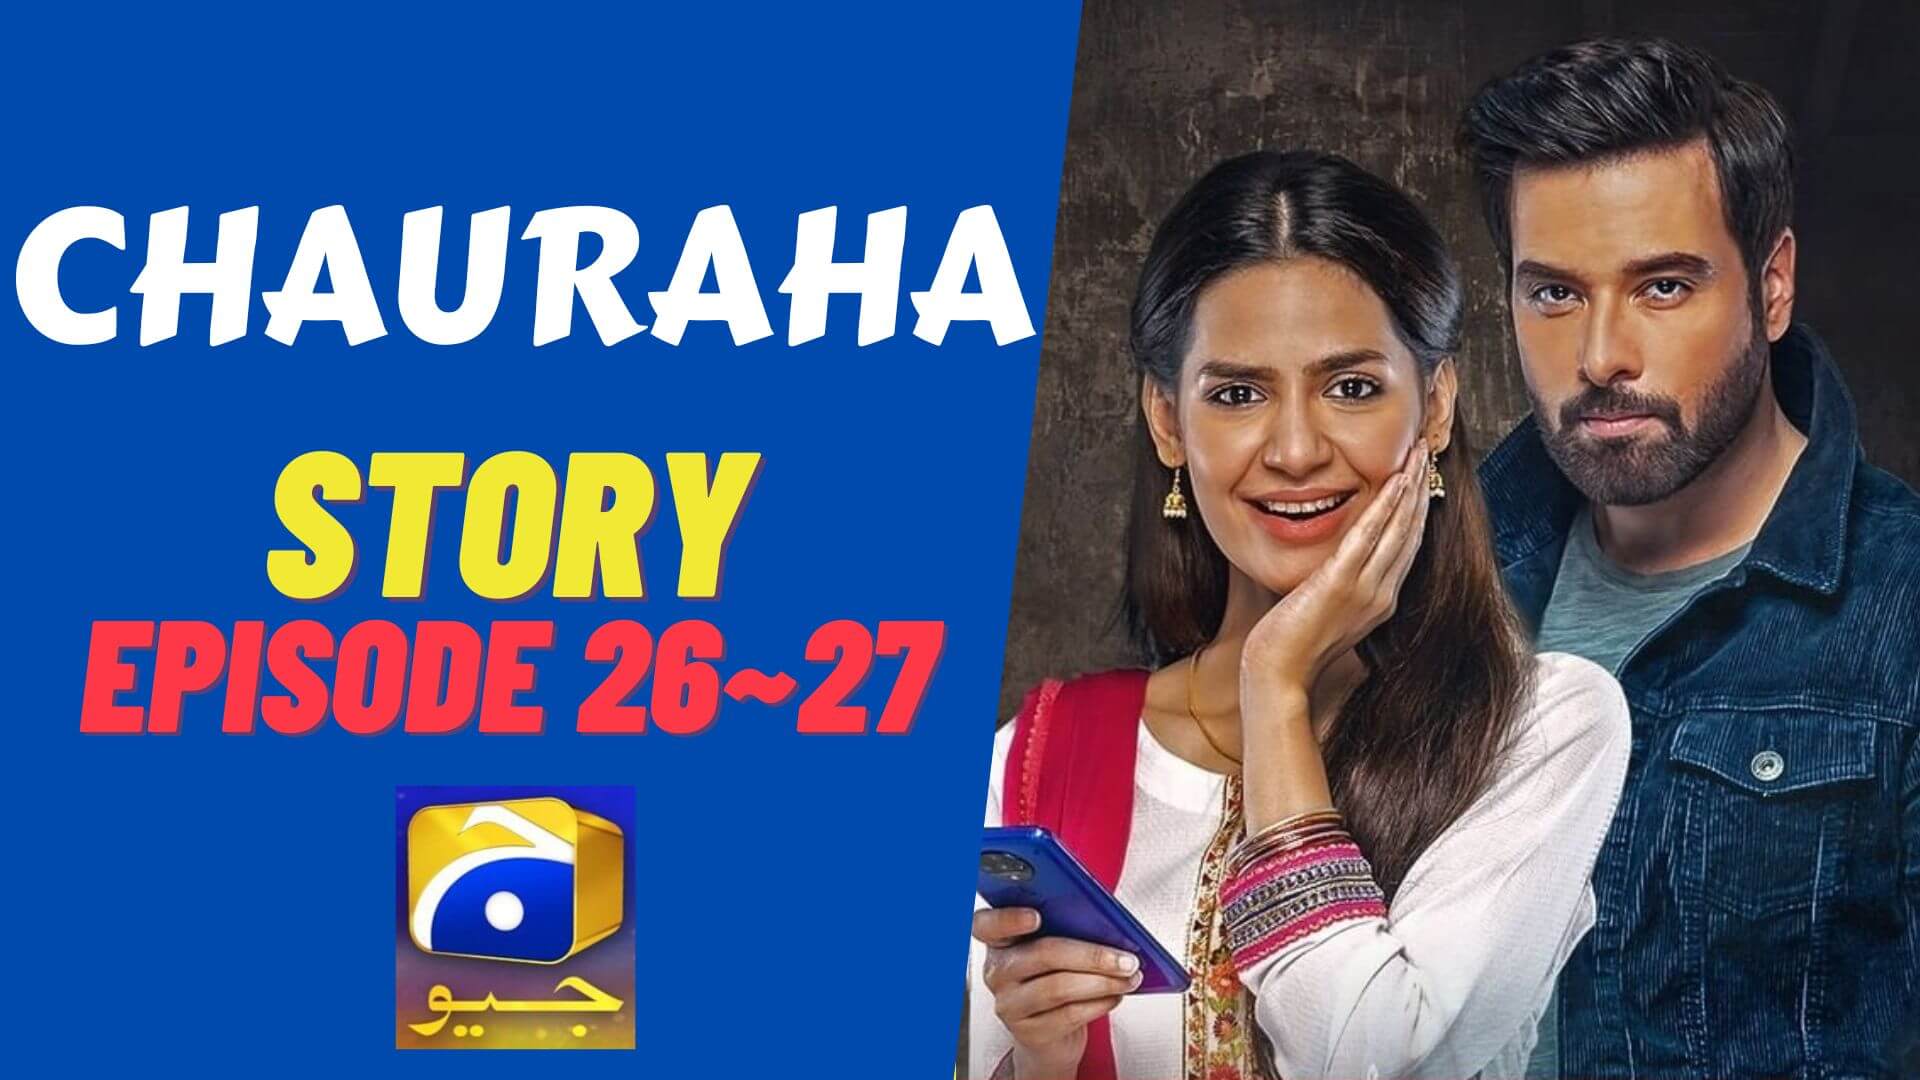 Chauraha Episode 26_27 Story